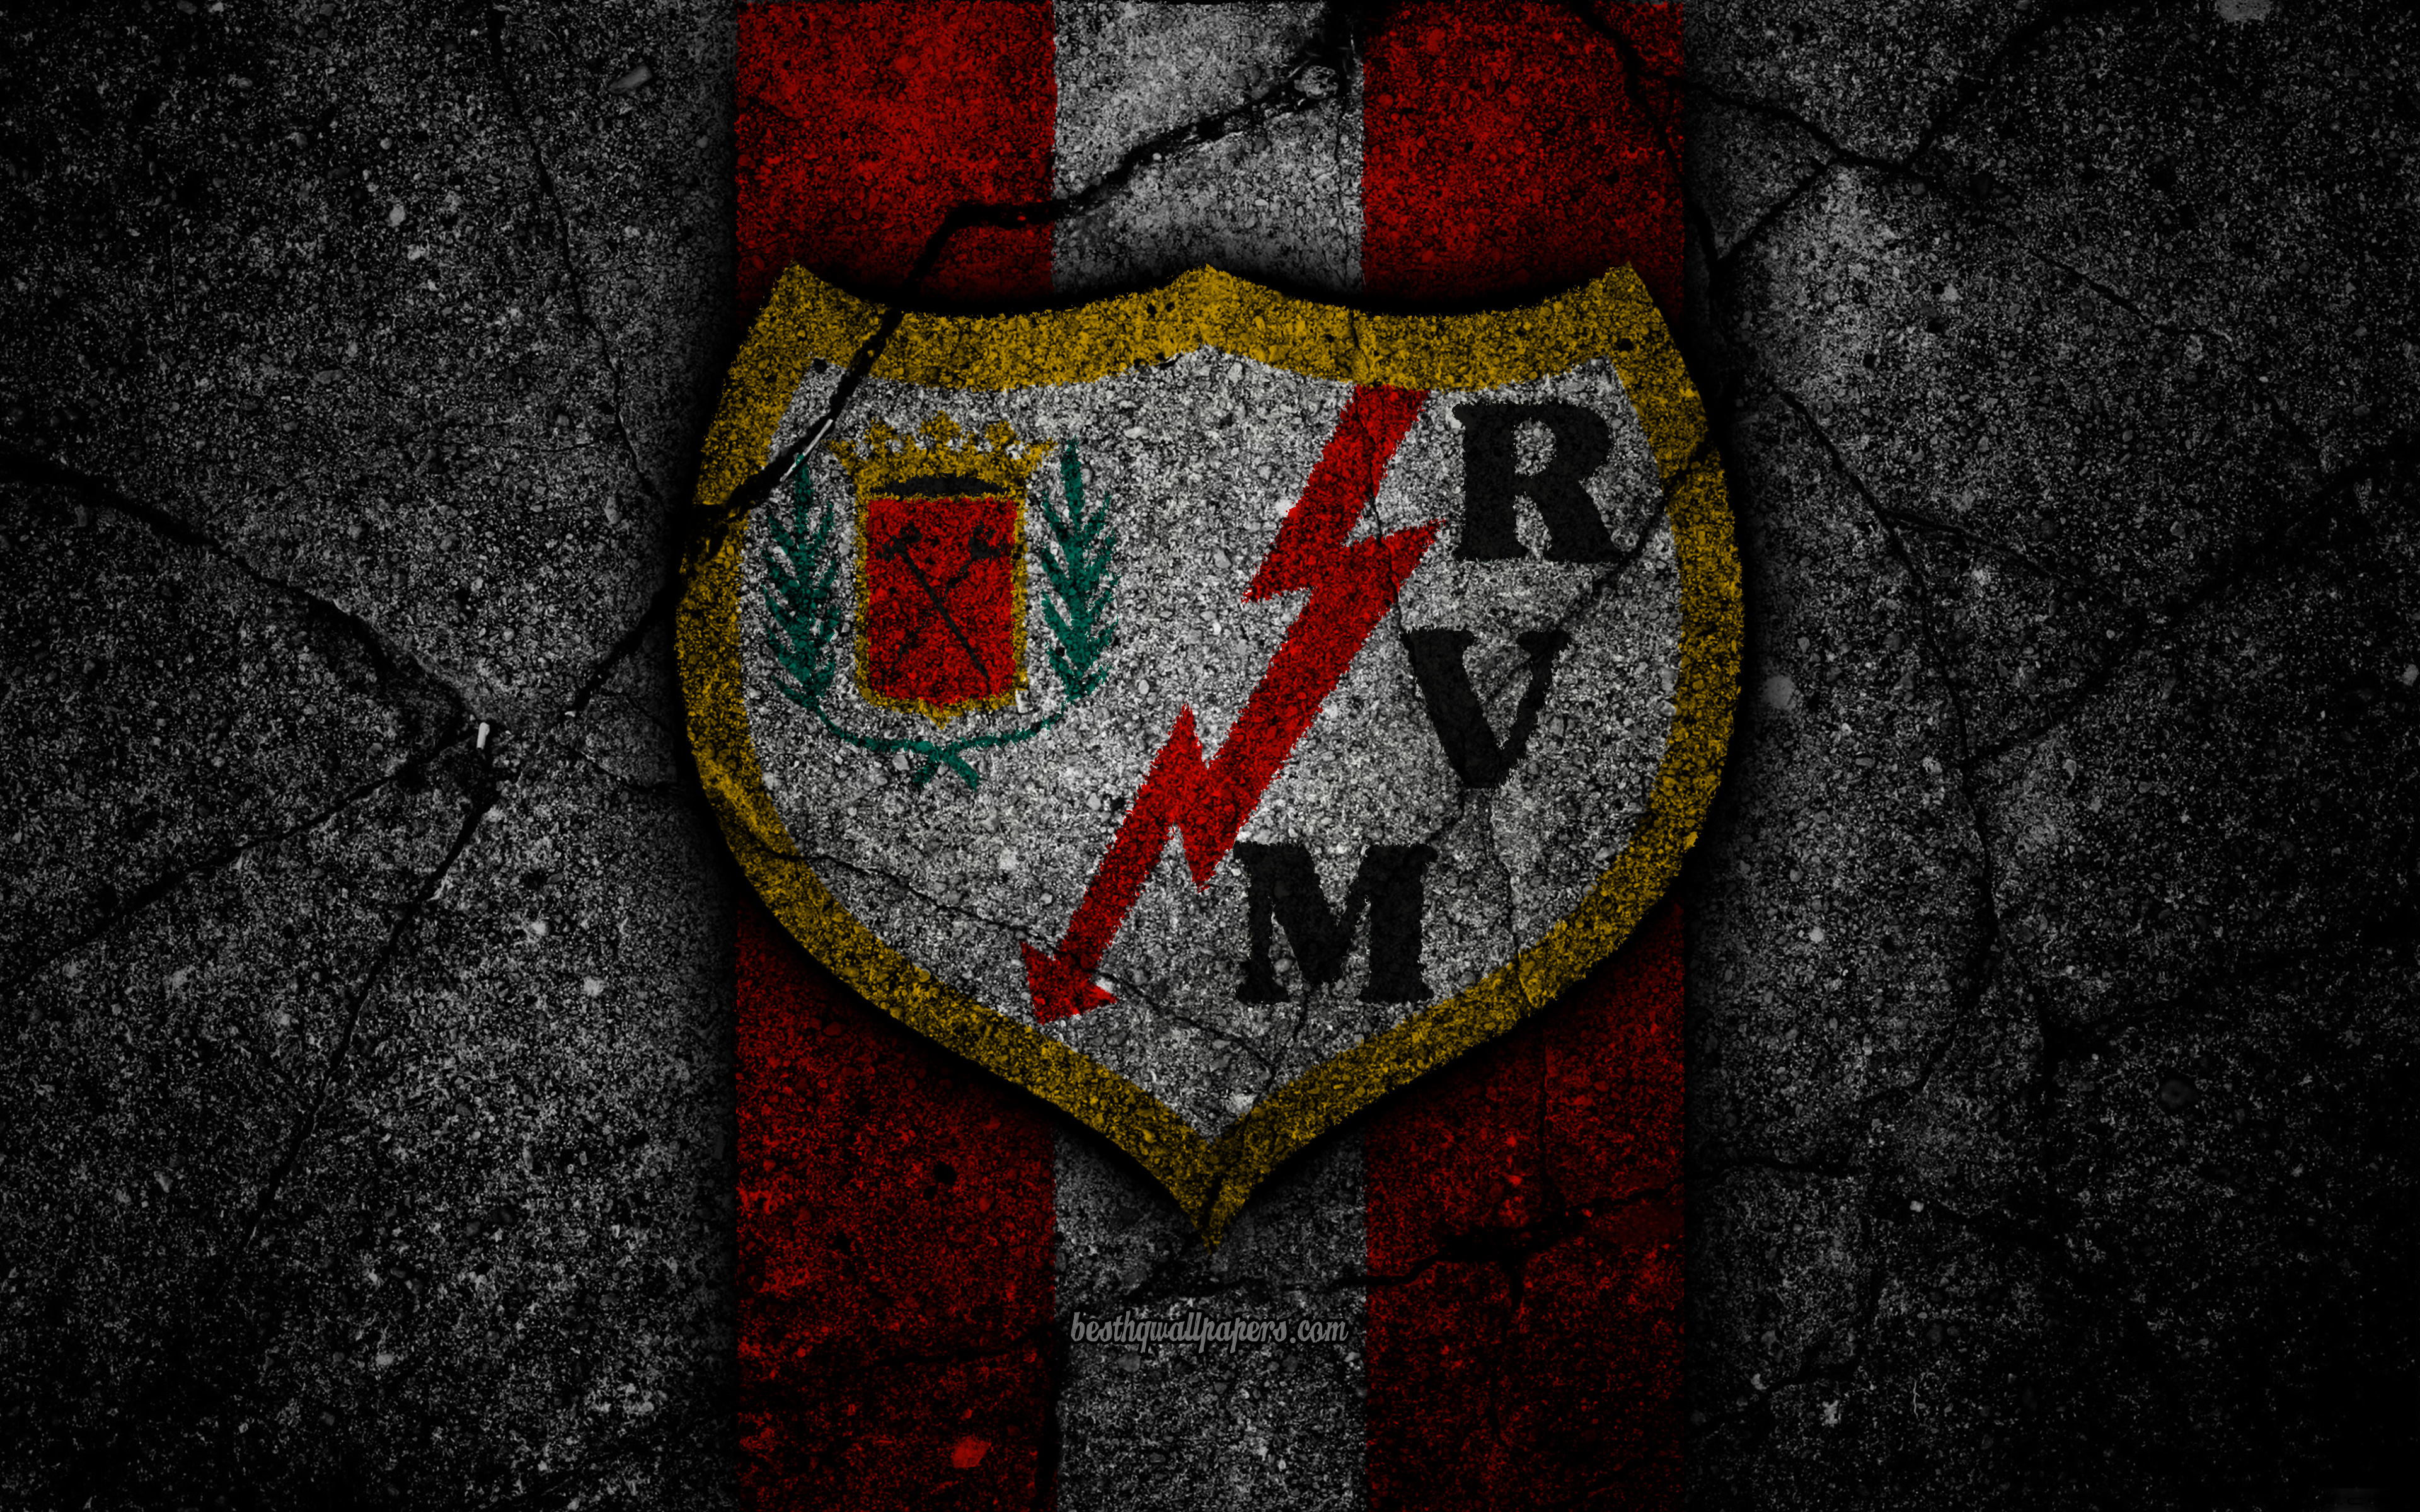 Handy-Wallpaper Sport, Fußball, Logo, Emblem, Rayo Vallecano kostenlos herunterladen.